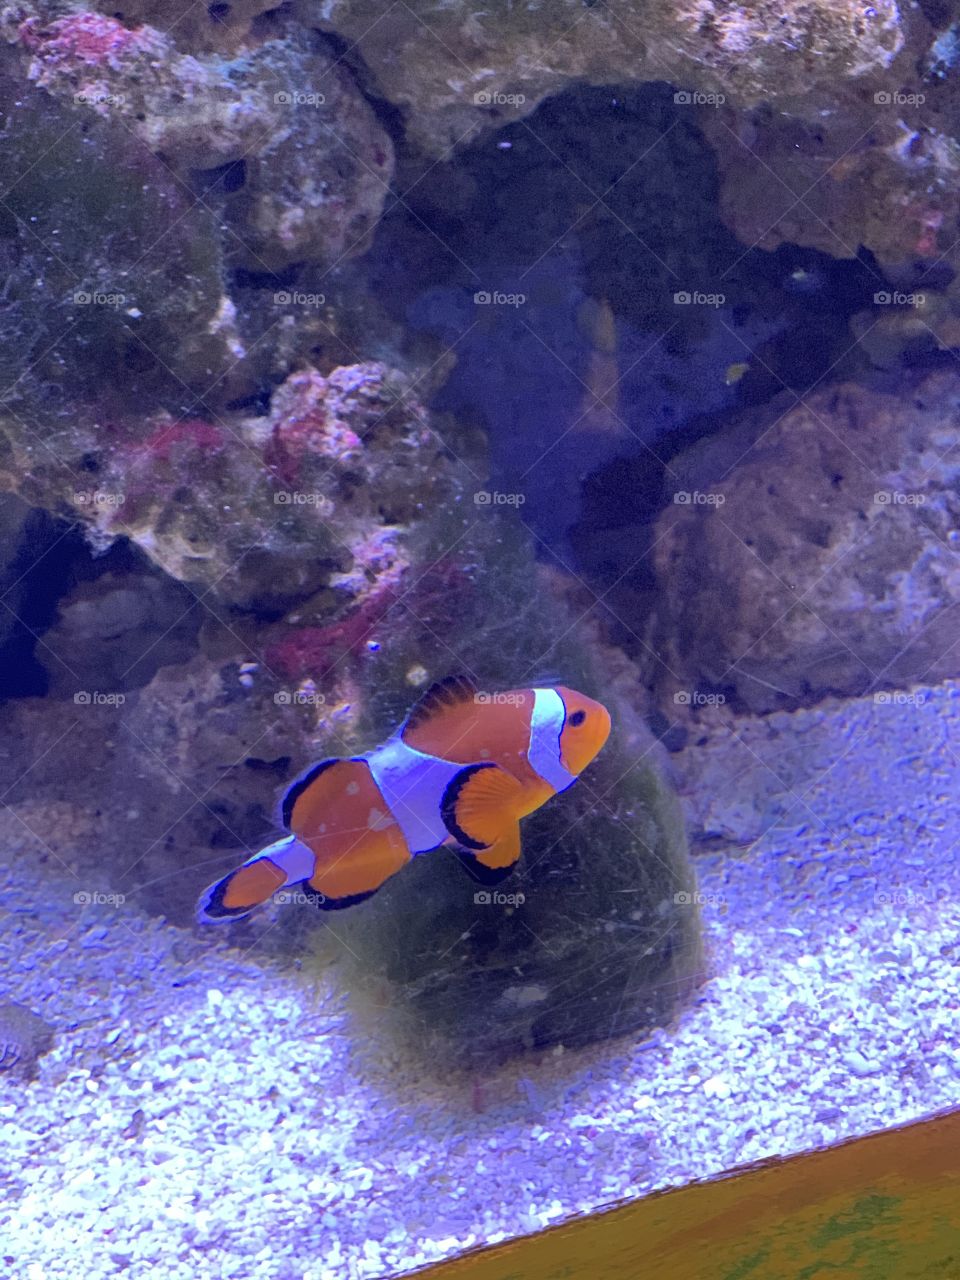 Dubai mall aquarium! Found nemo 